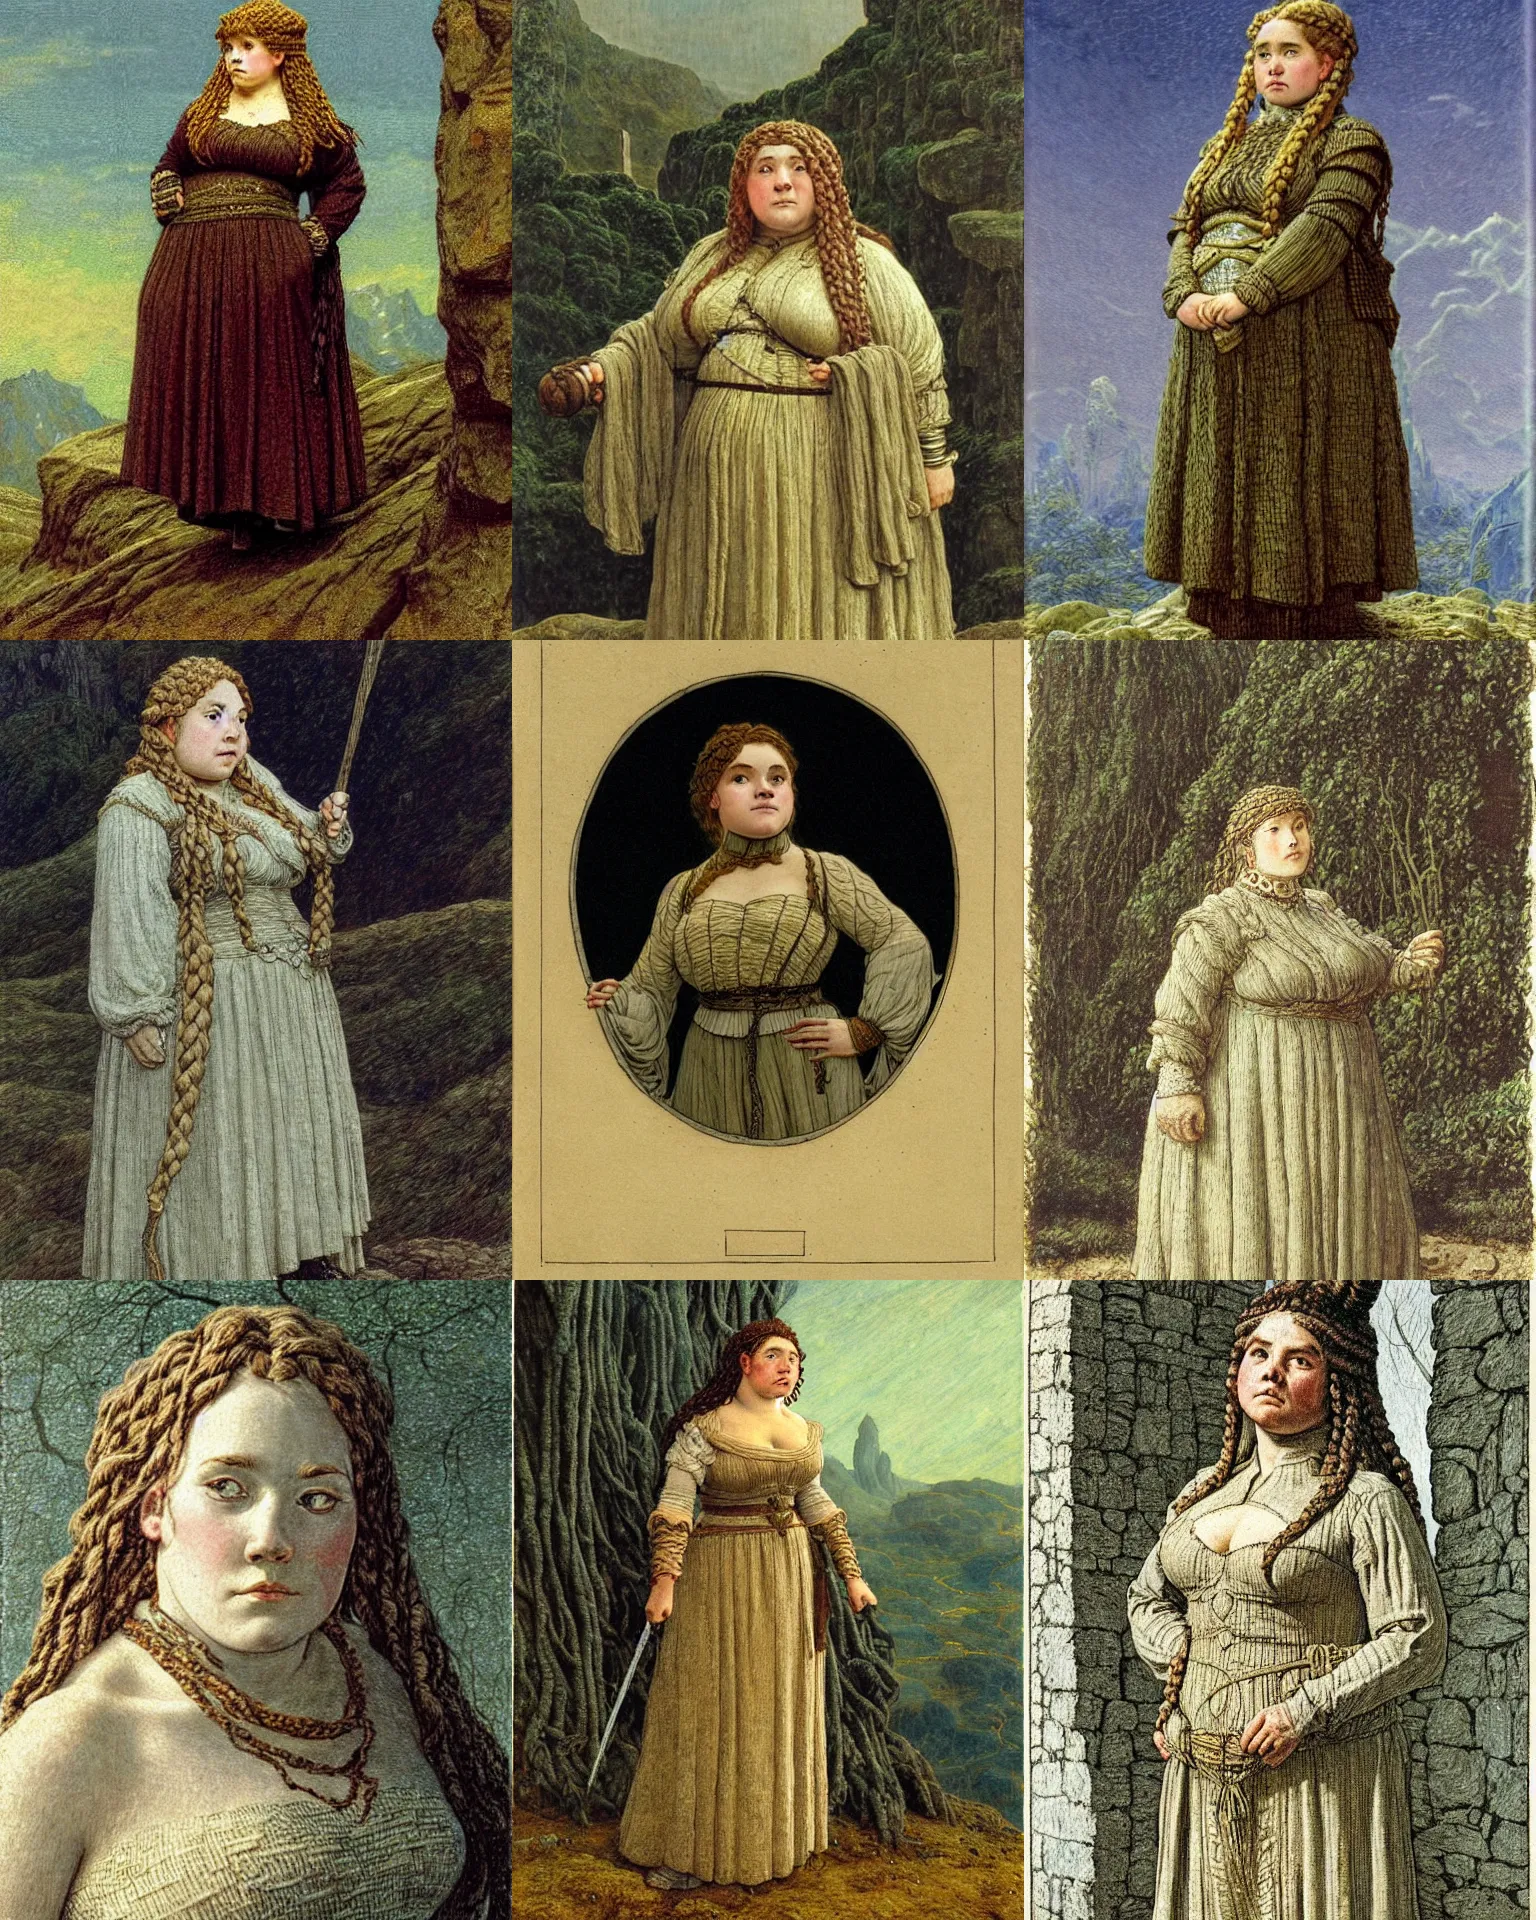 Prompt: female dwarven noblewoman, chubby short stature, braided intricate hair, by caspar david friedrich